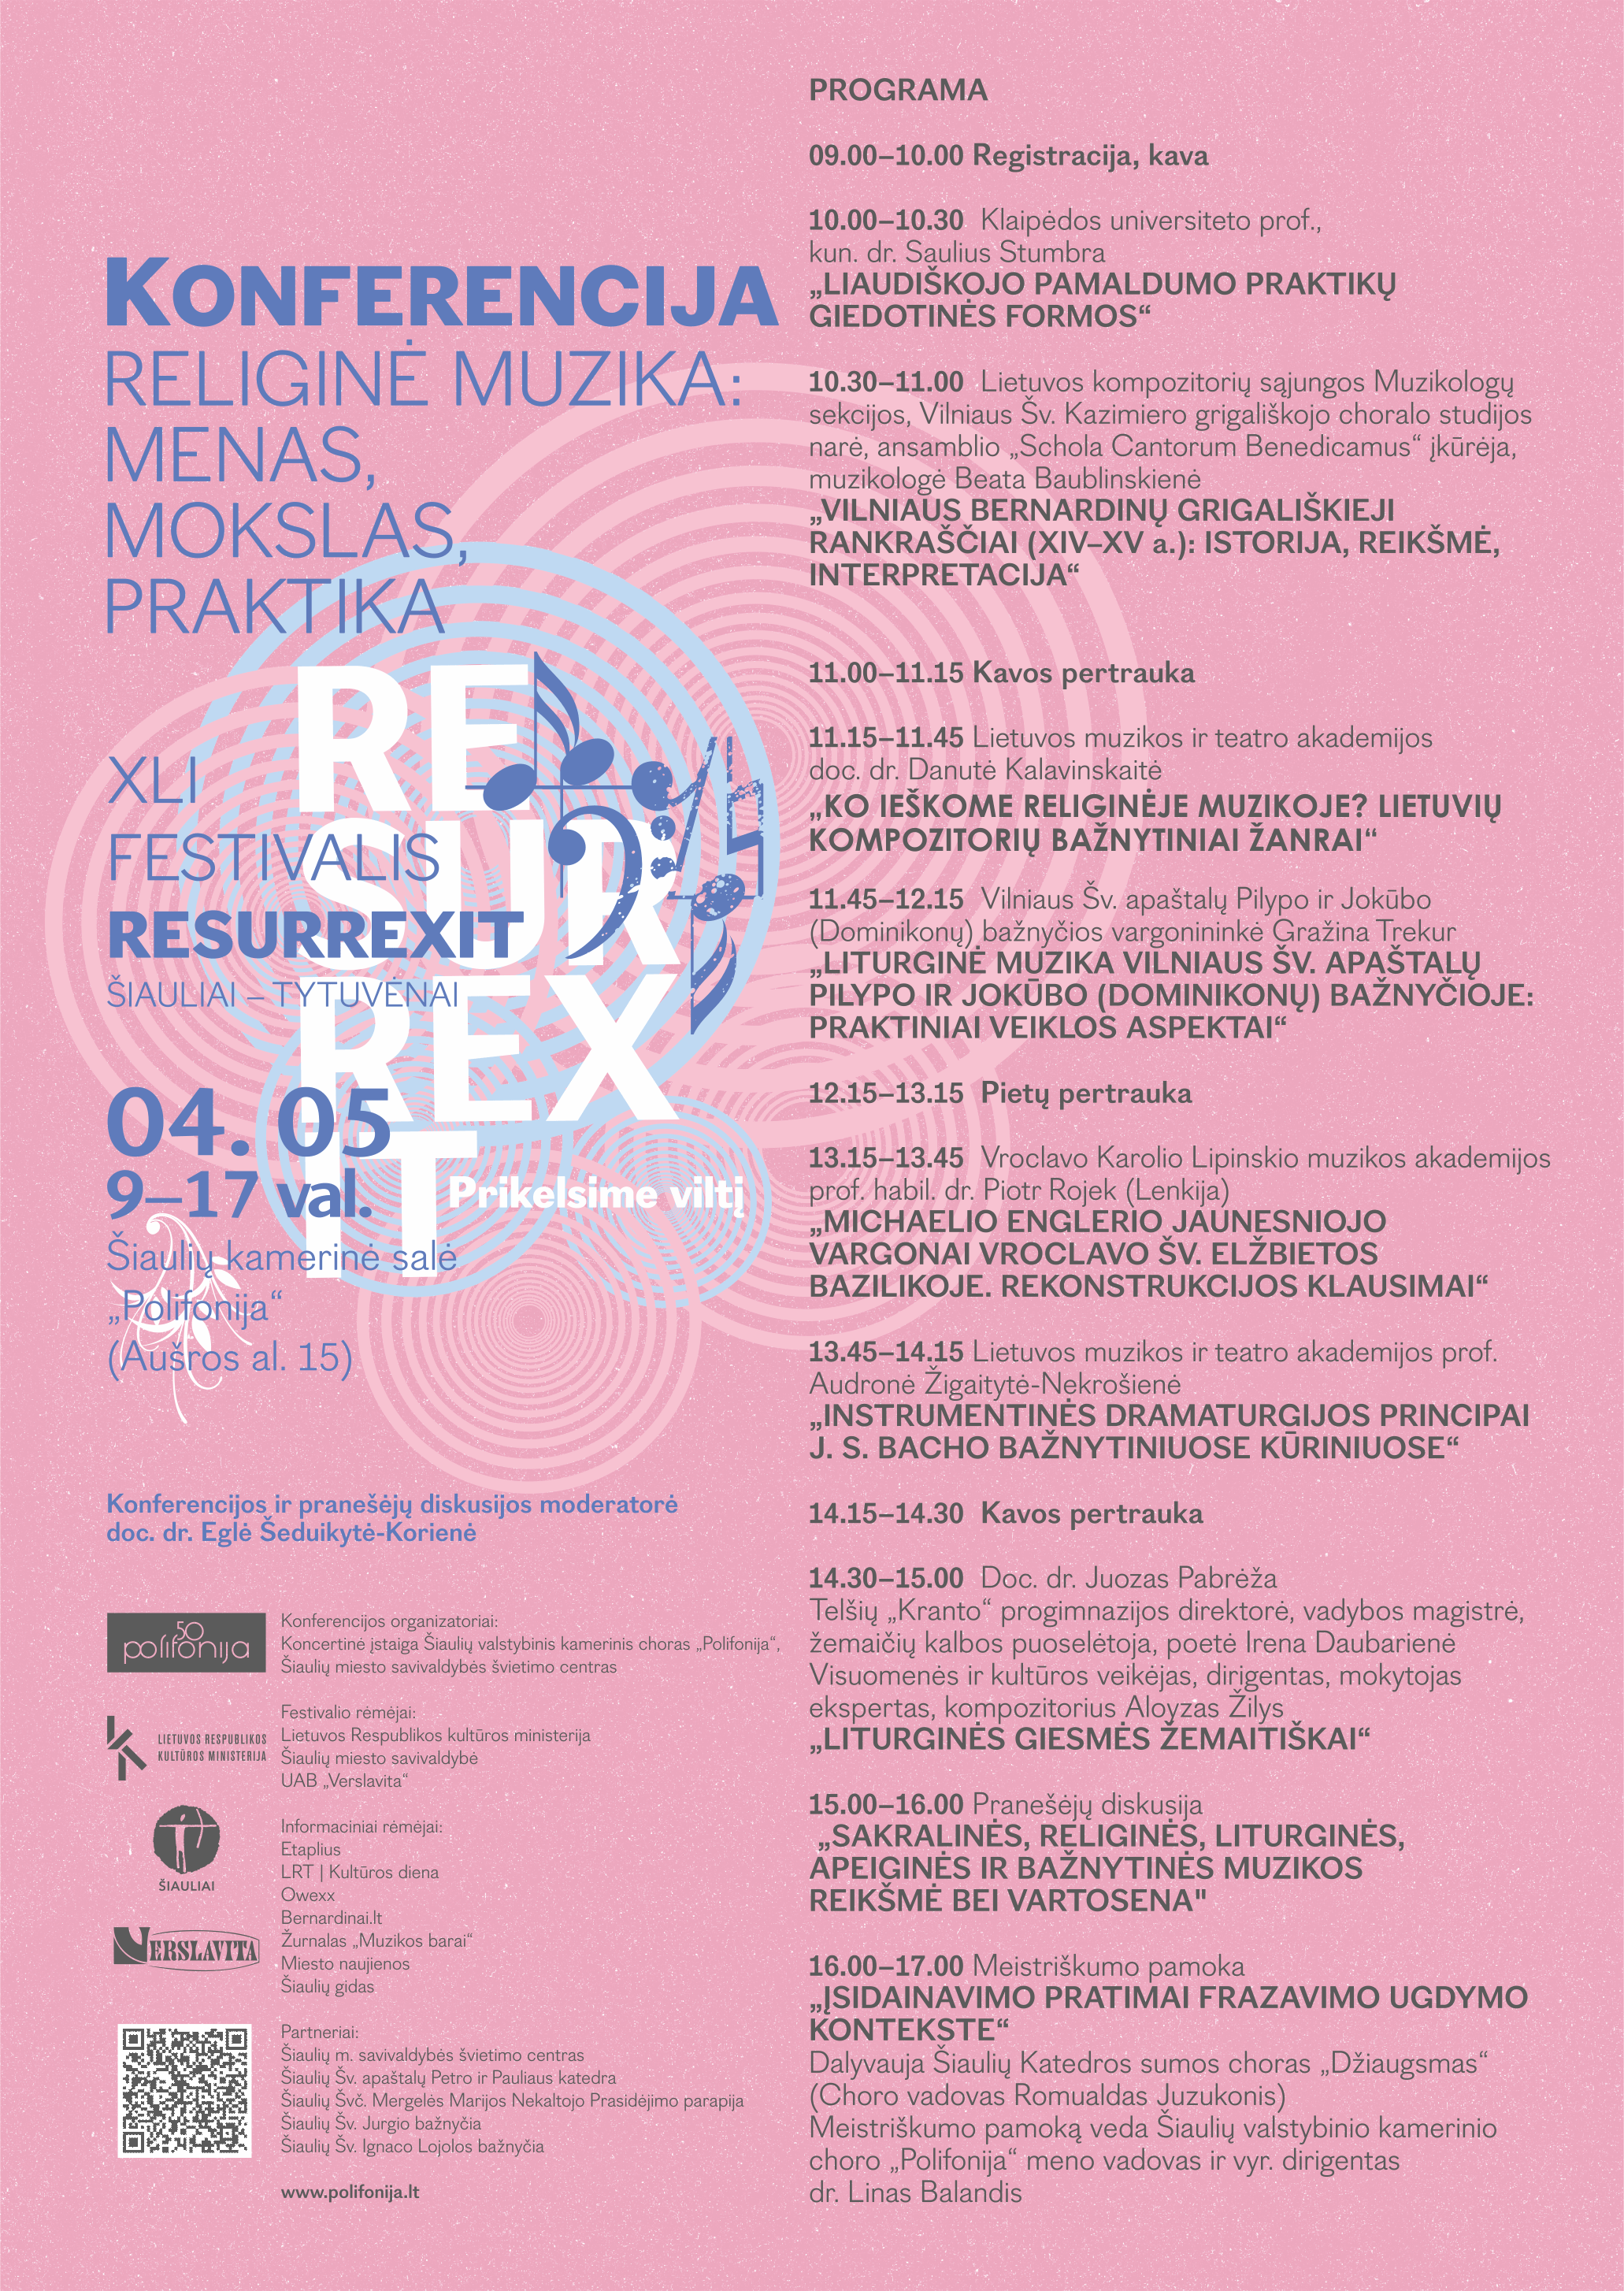 Tarptautinė RESURREXIT festivalio konferencija. “Religinė muzika: menas, mokslas, praktika” 